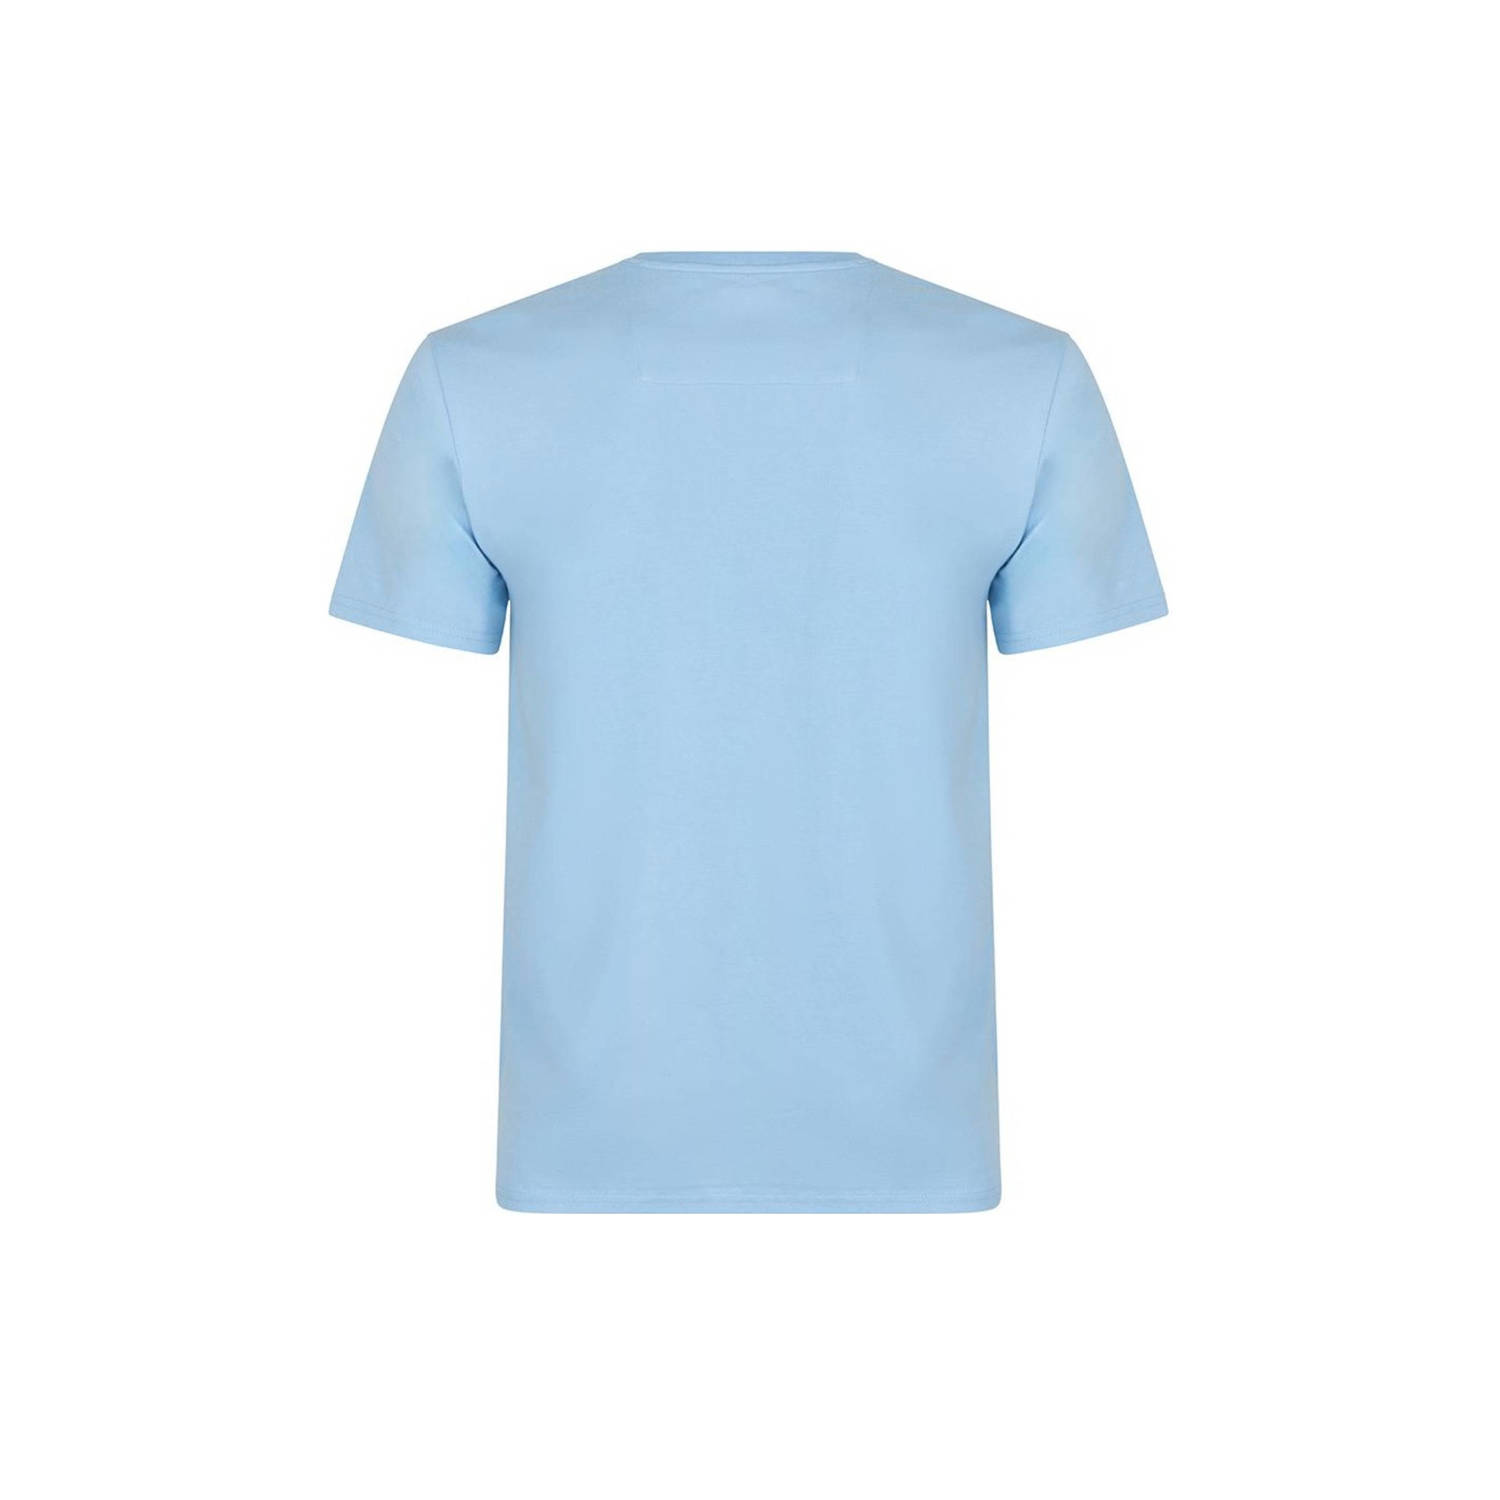 Rellix T-shirt met printopdruk lichtblauw